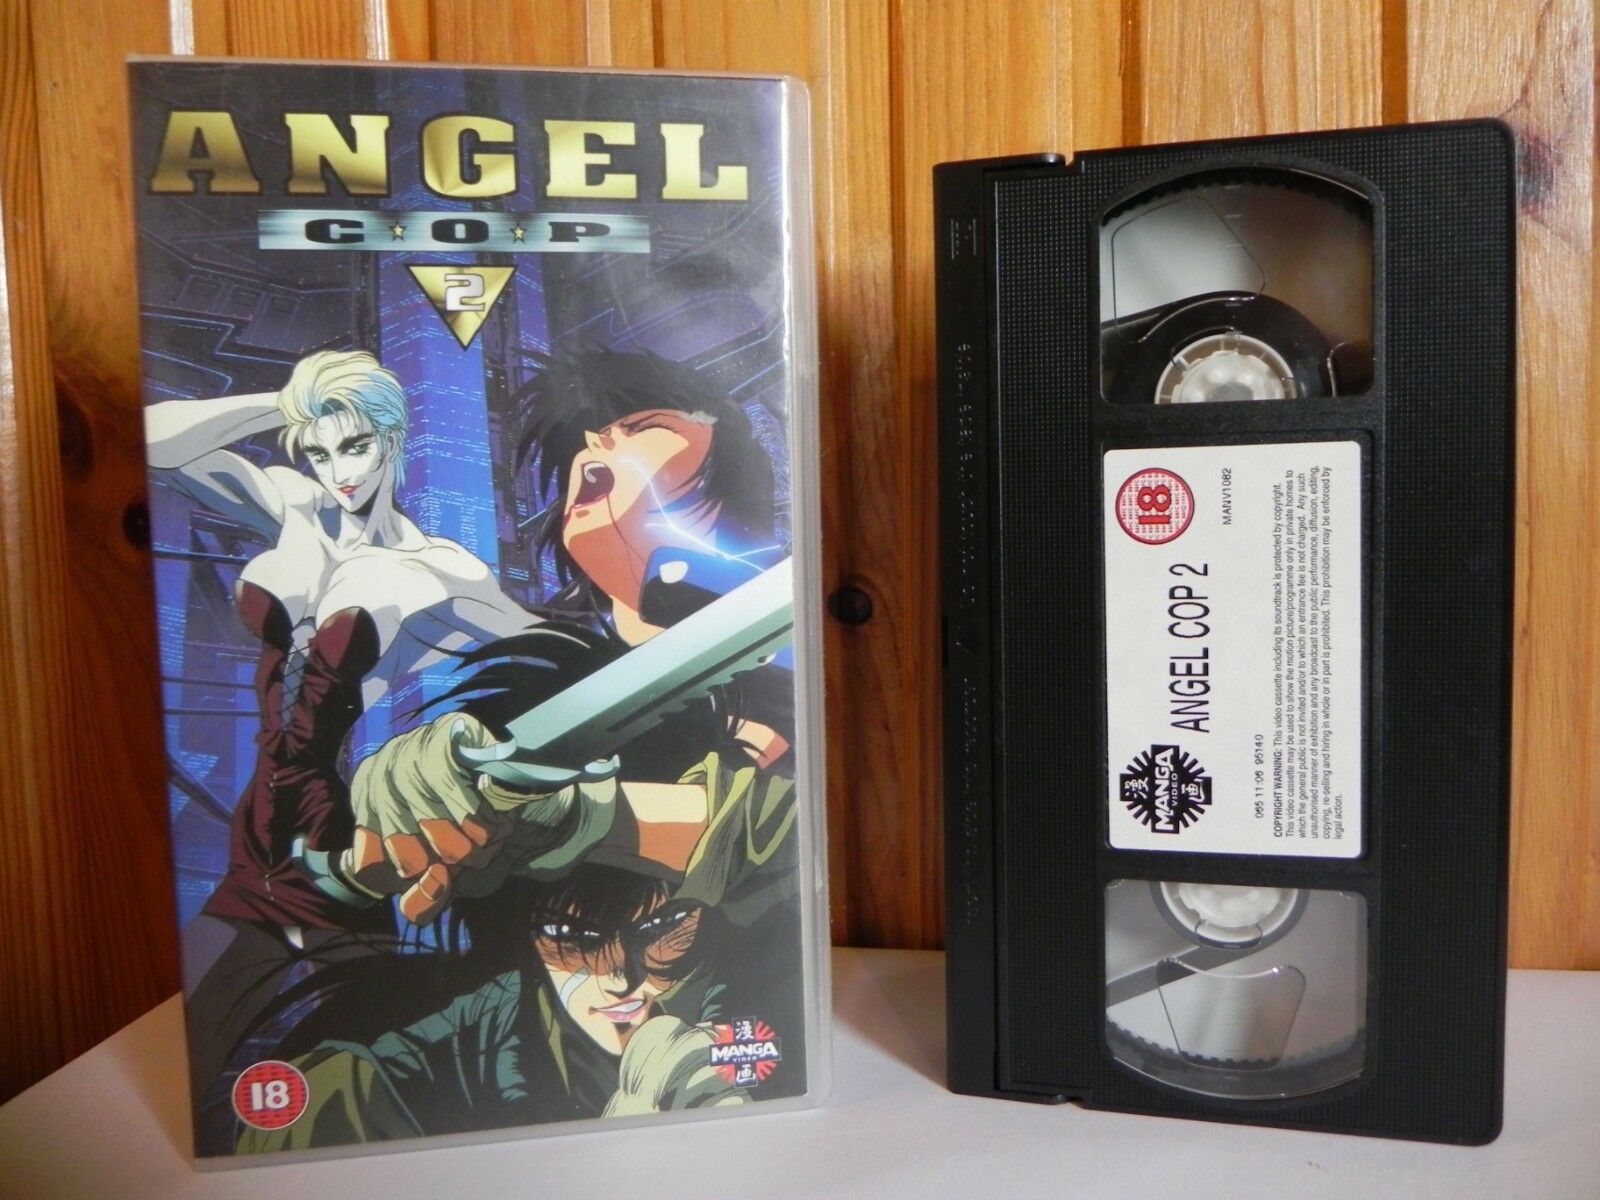 Angel Cop 2 - Manga Video - Sci-Fi - Manga - Animated - Cert (18) - Pal VHS-